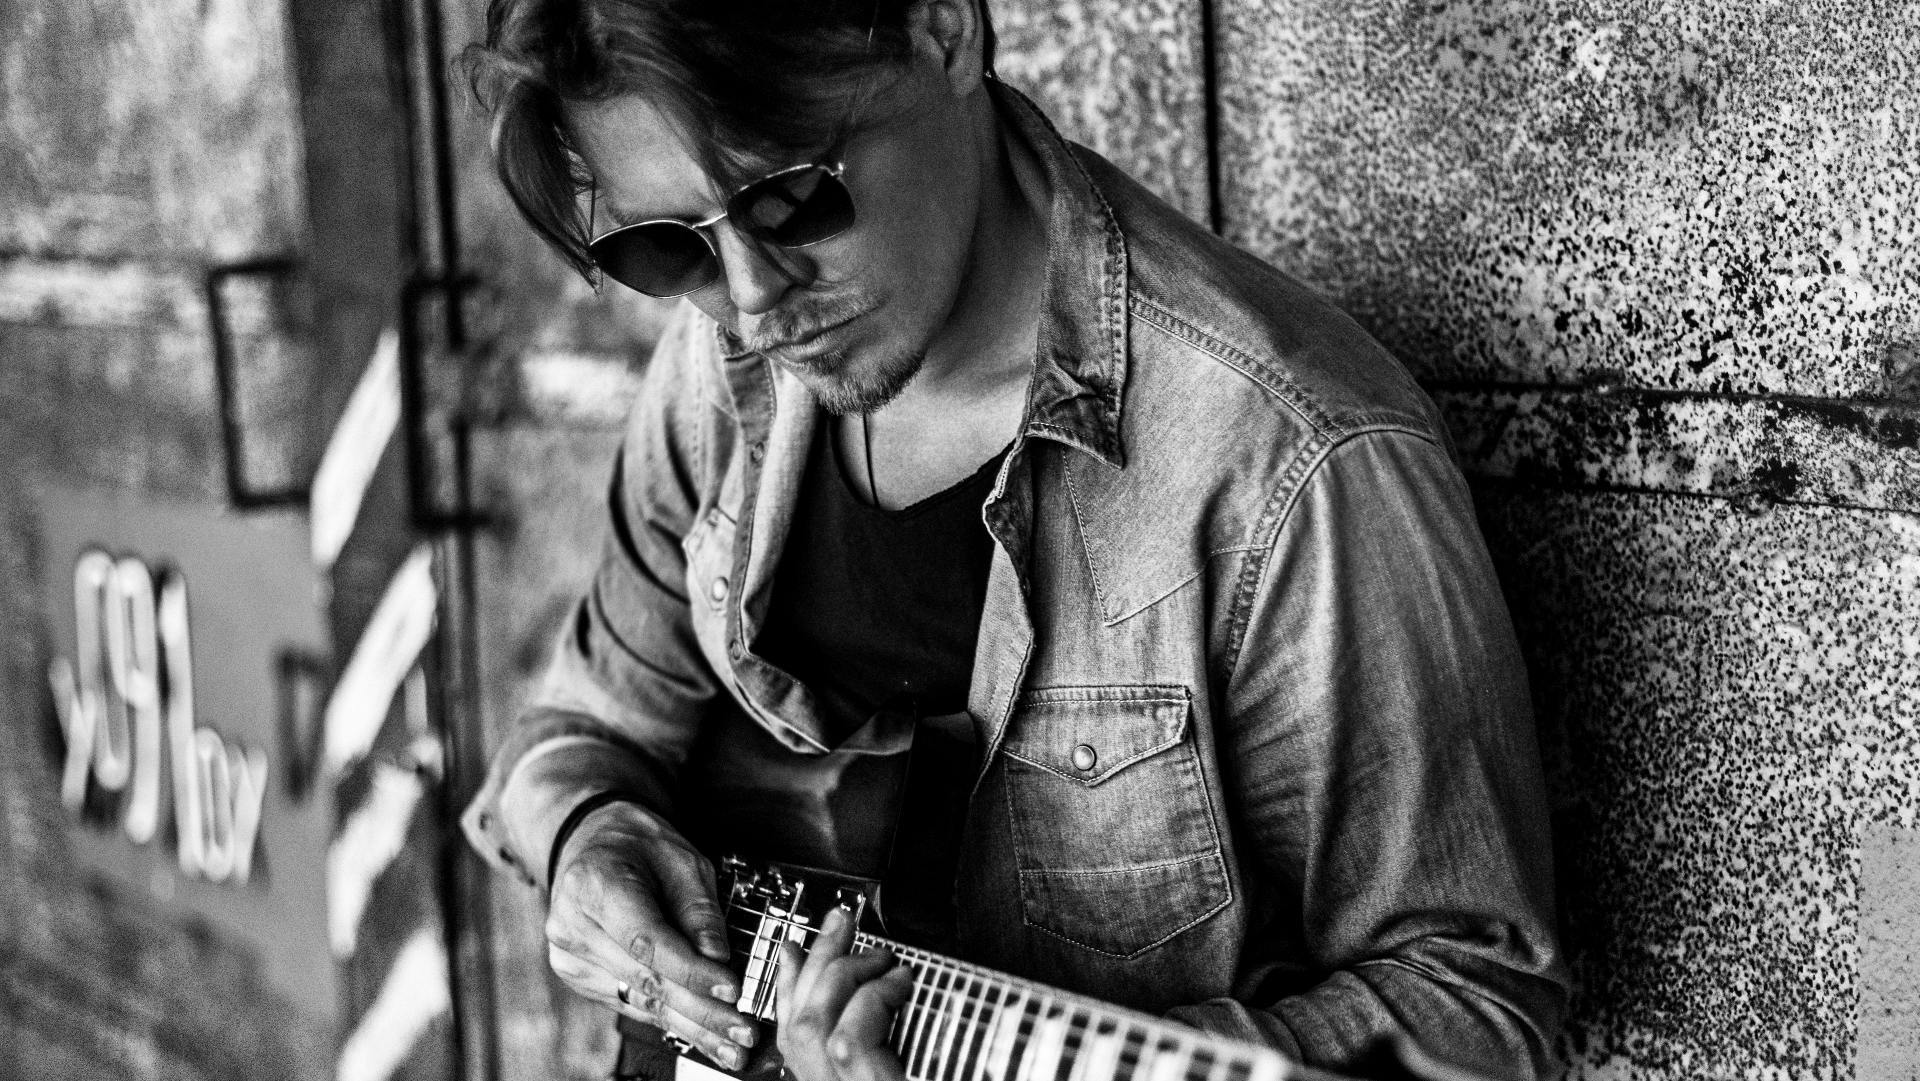 musician person musical instrument human sunglasses accessories guitarist performer guitar leisure activities